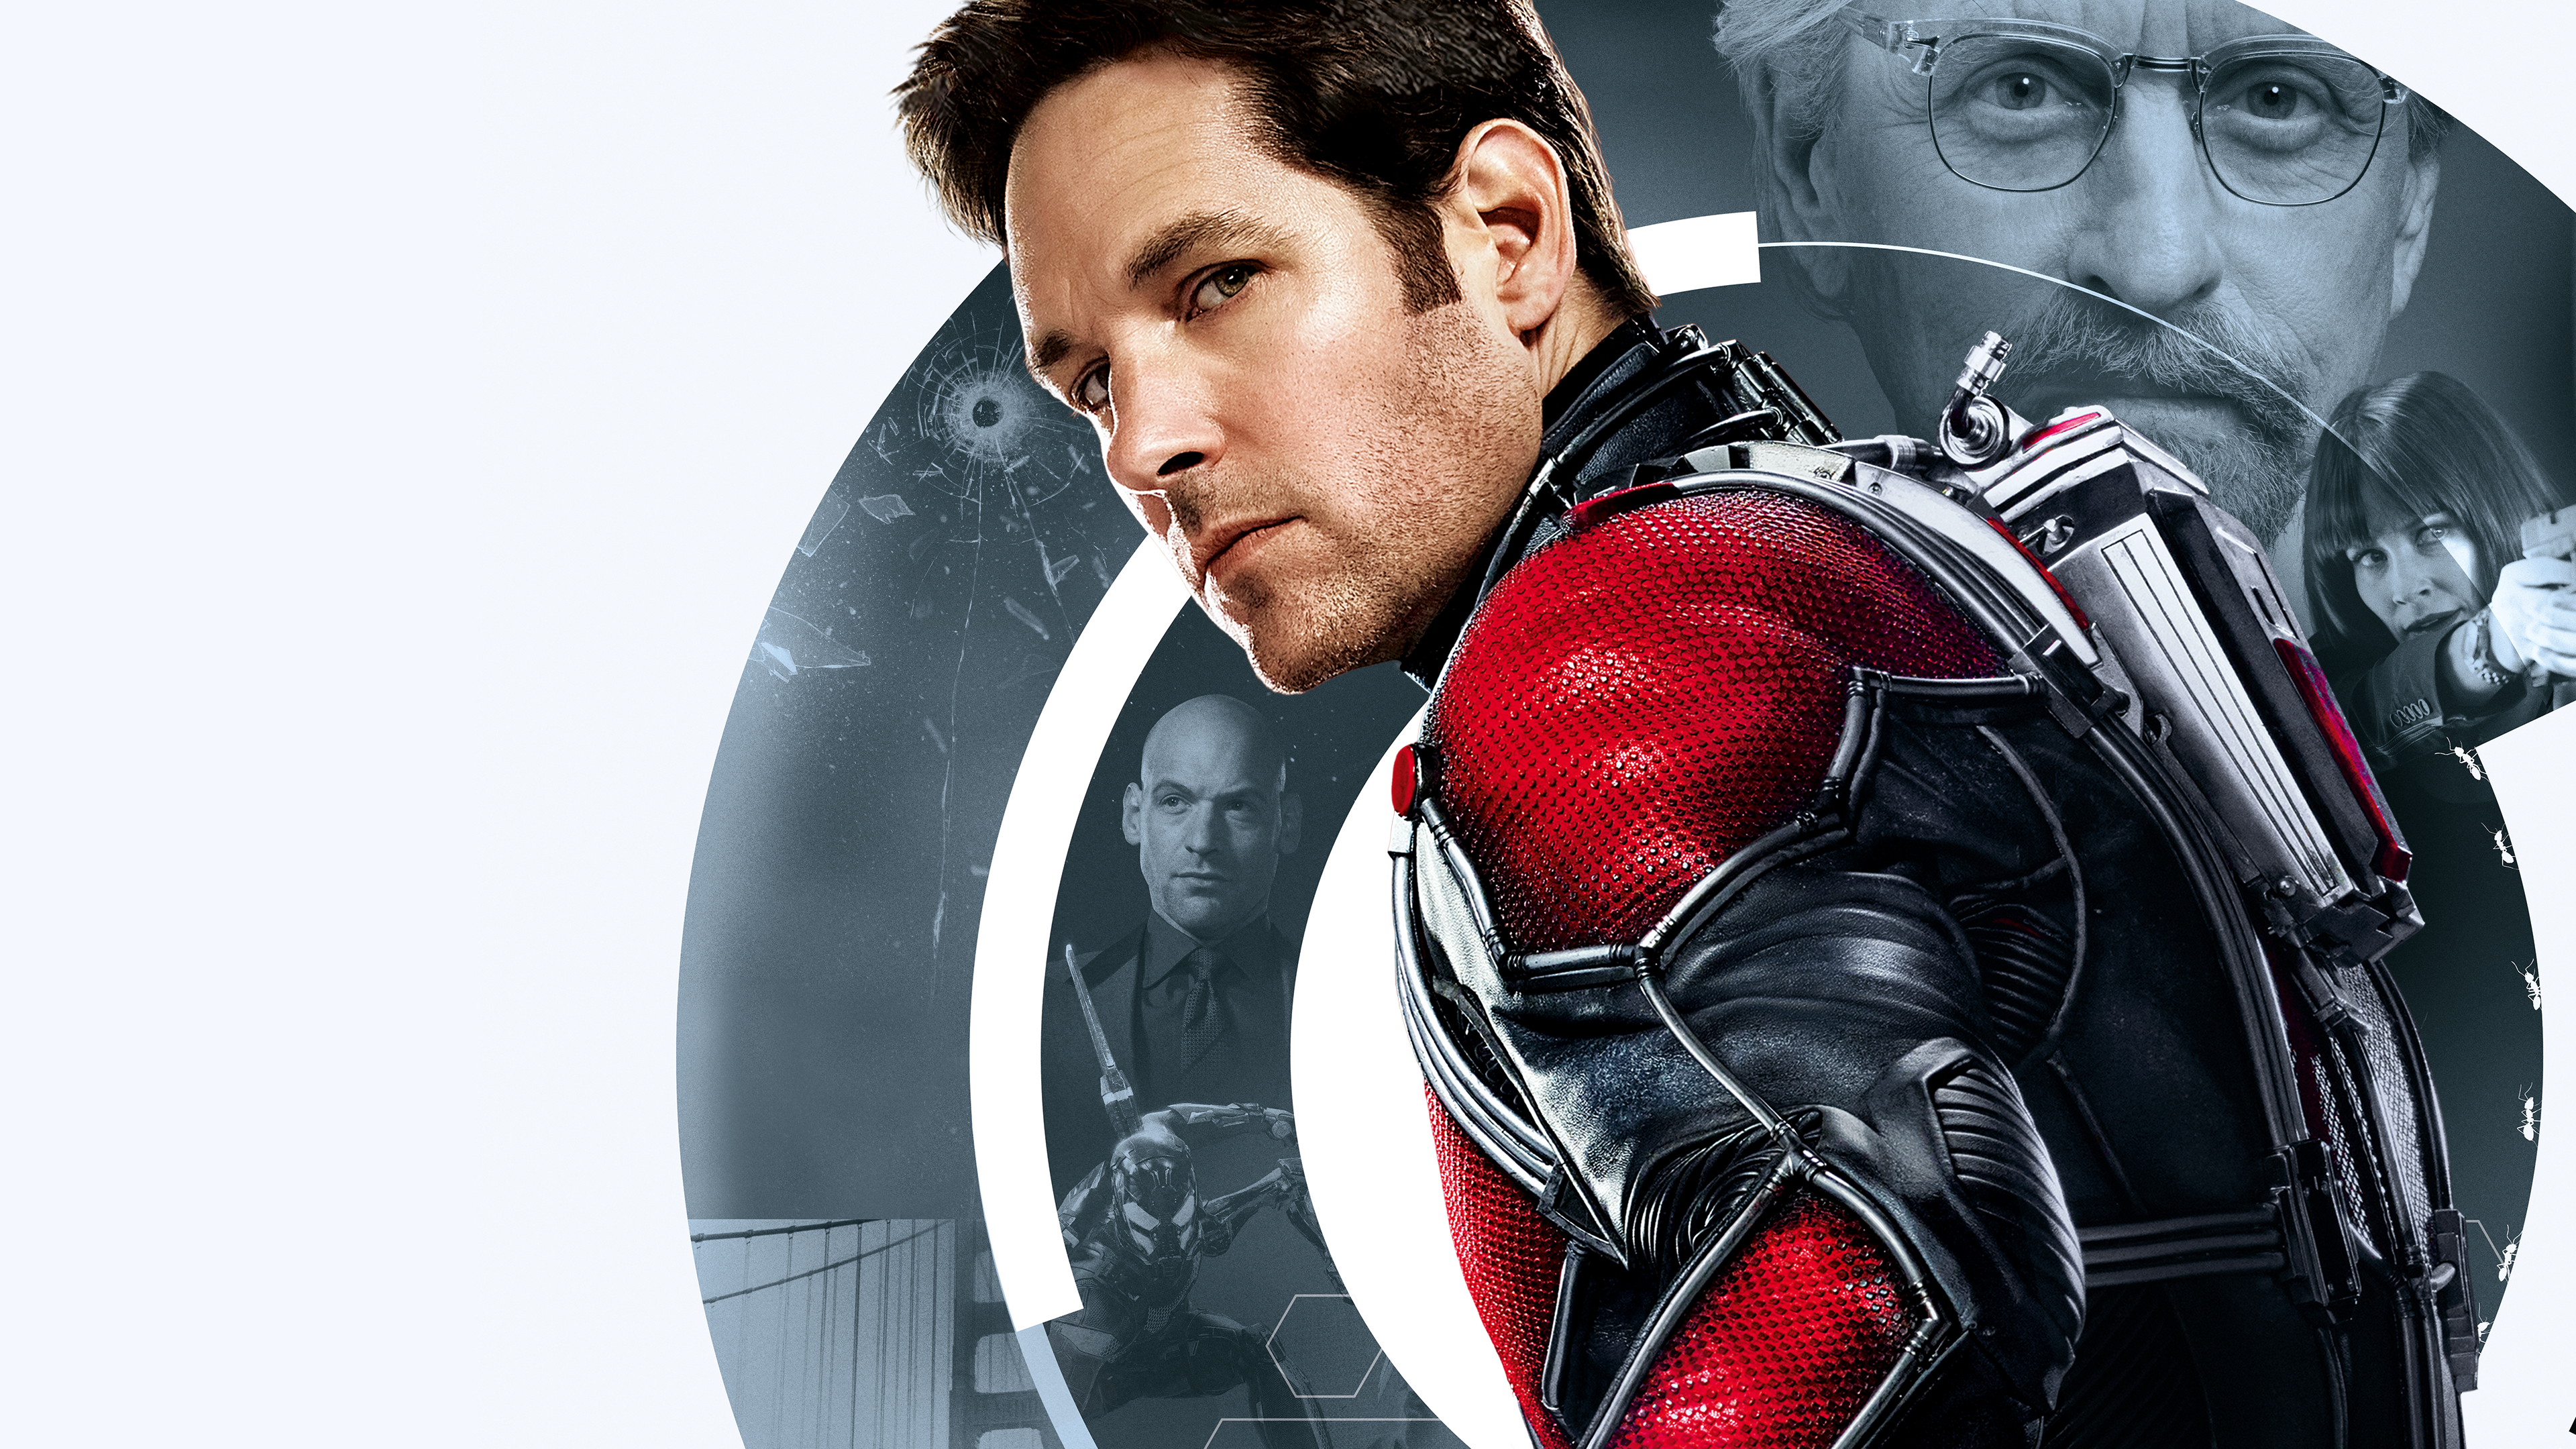 Marvel Studios' Ant-Man